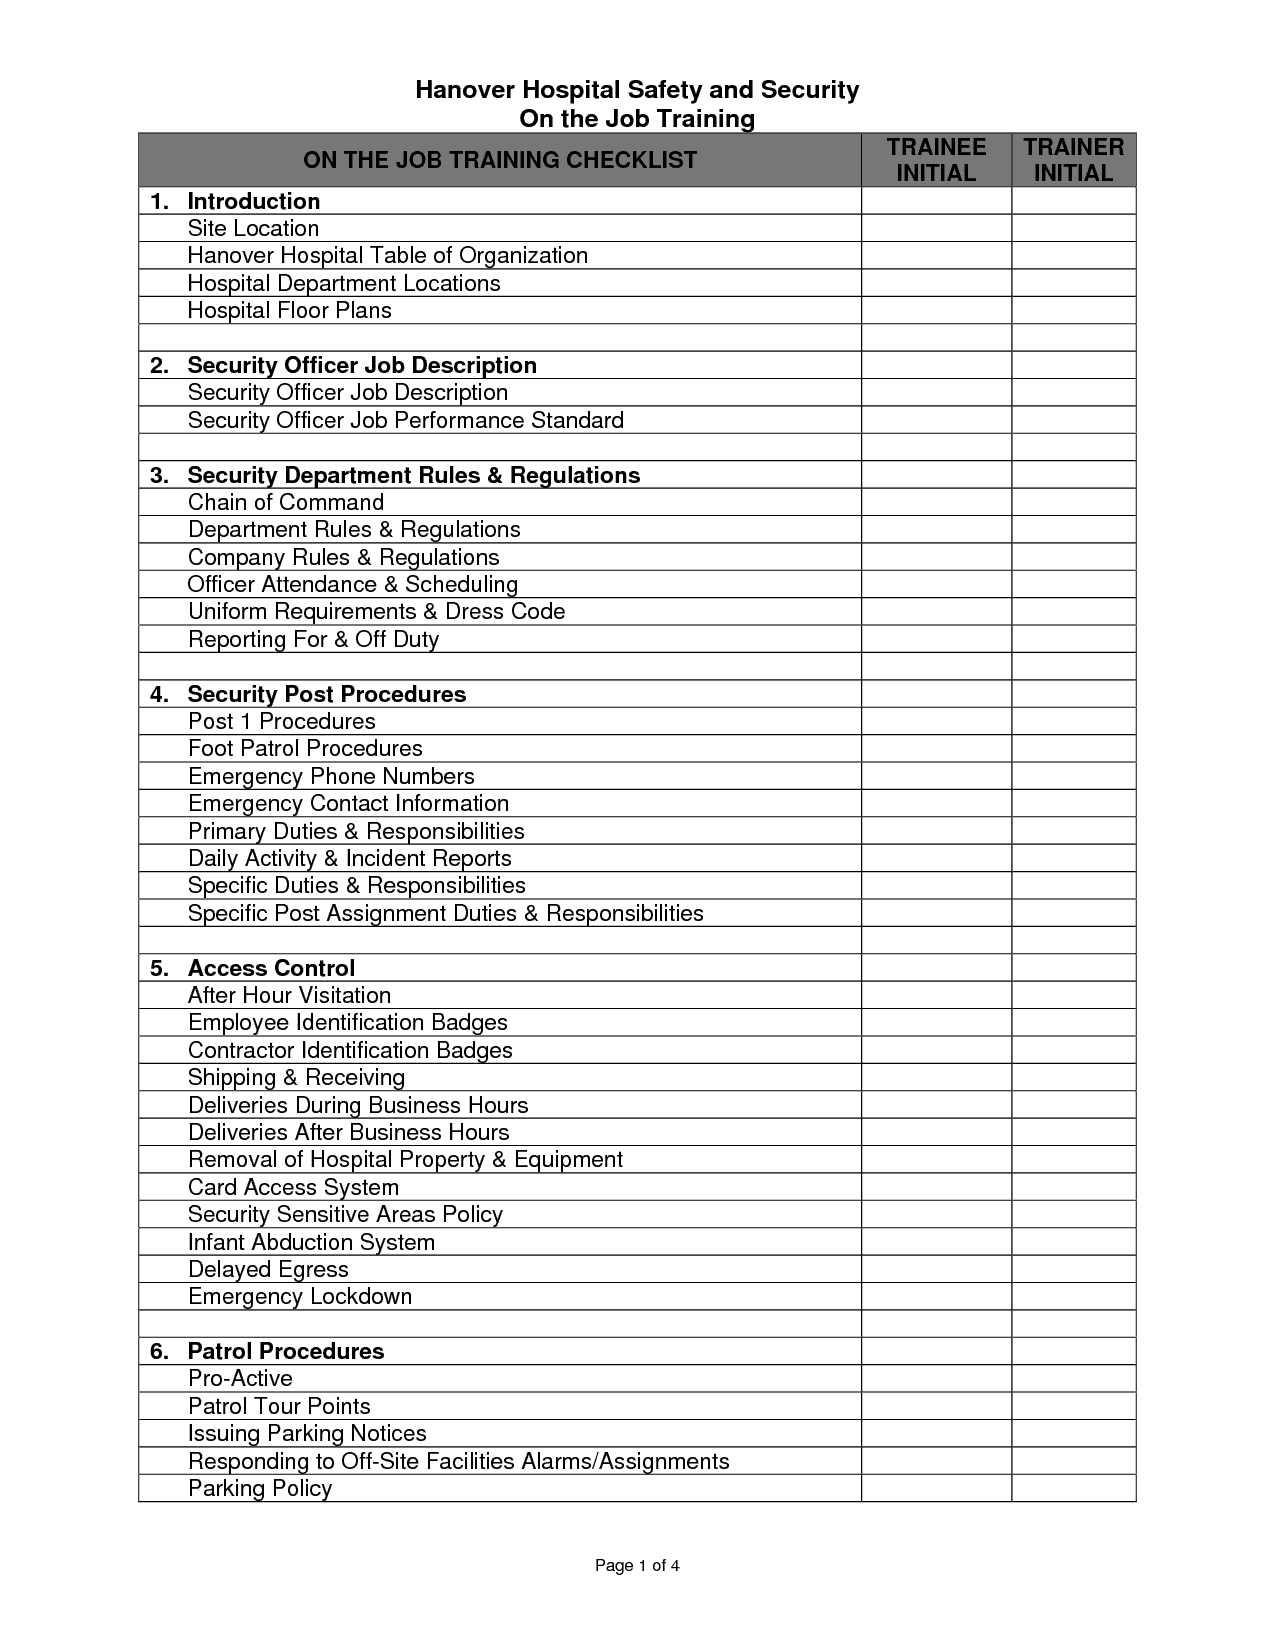 Duty Checklist Template